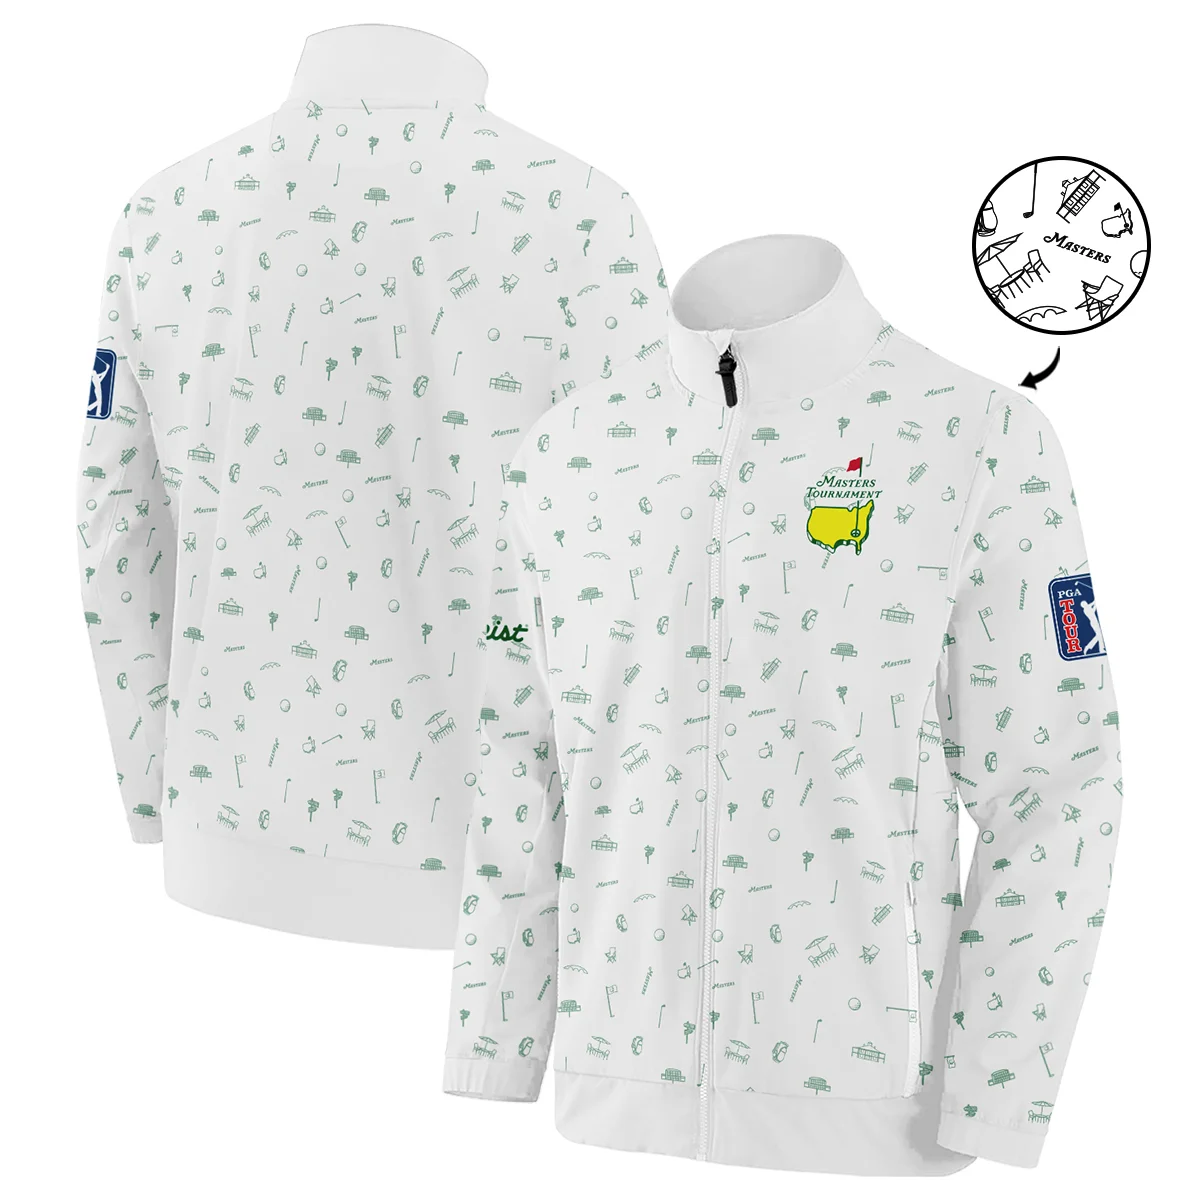 Golf Masters Tournament Titleist Unisex Sweatshirt Augusta Icons Pattern White Green Golf Sports All Over Print Sweatshirt